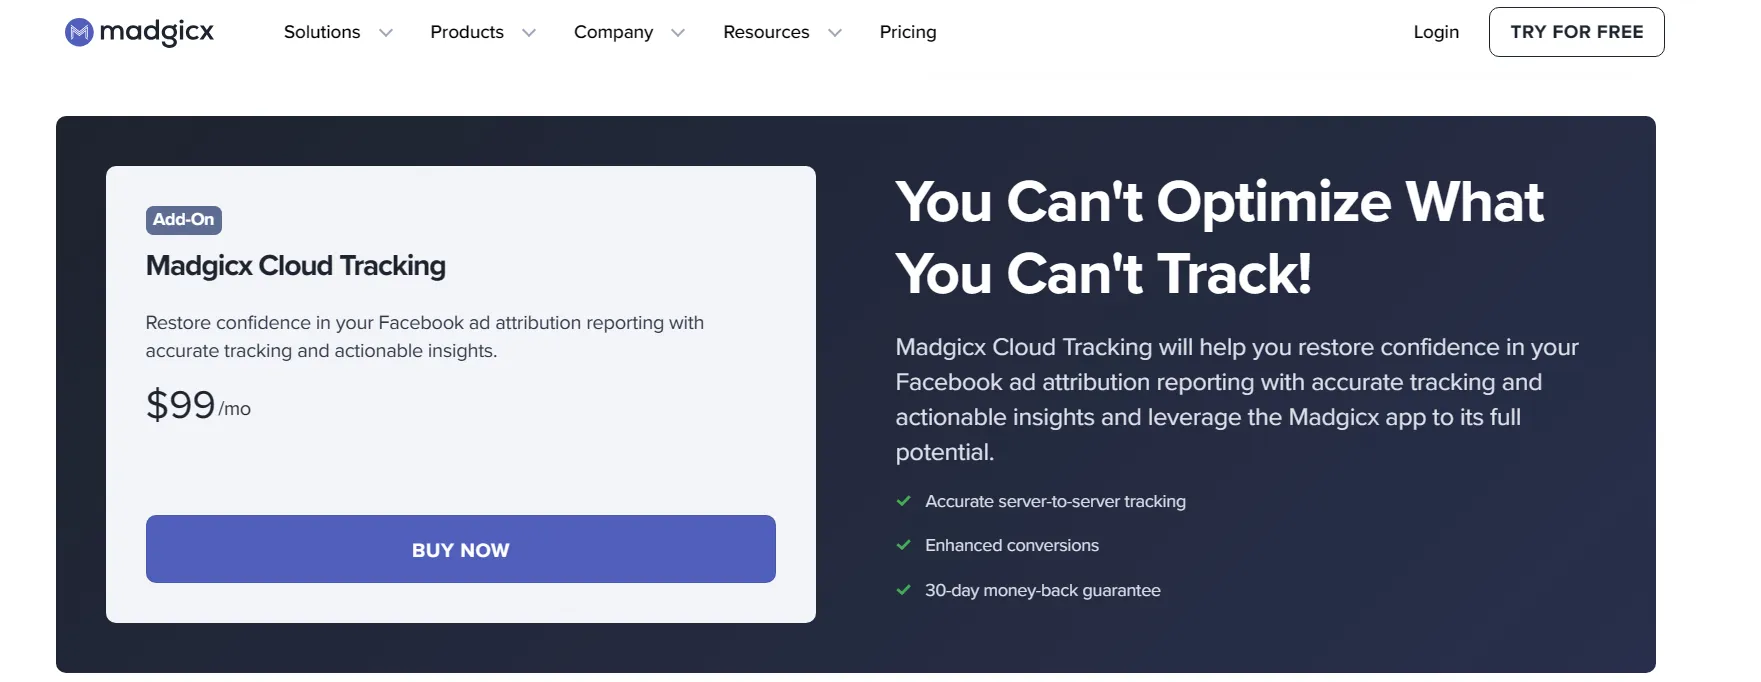 Madgicx Cloud-tracking